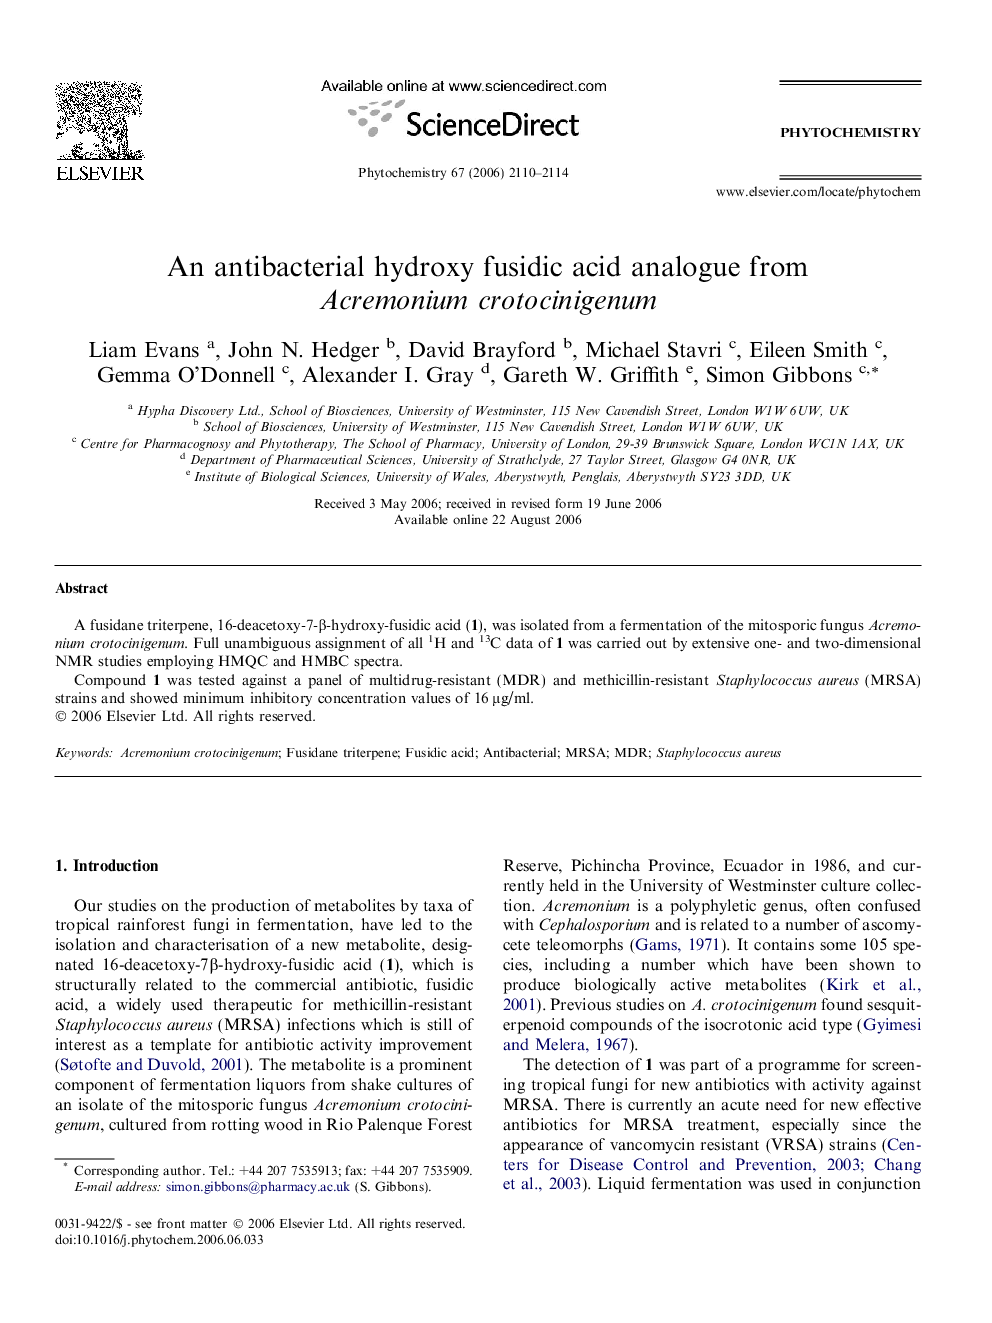 An antibacterial hydroxy fusidic acid analogue from Acremonium crotocinigenum